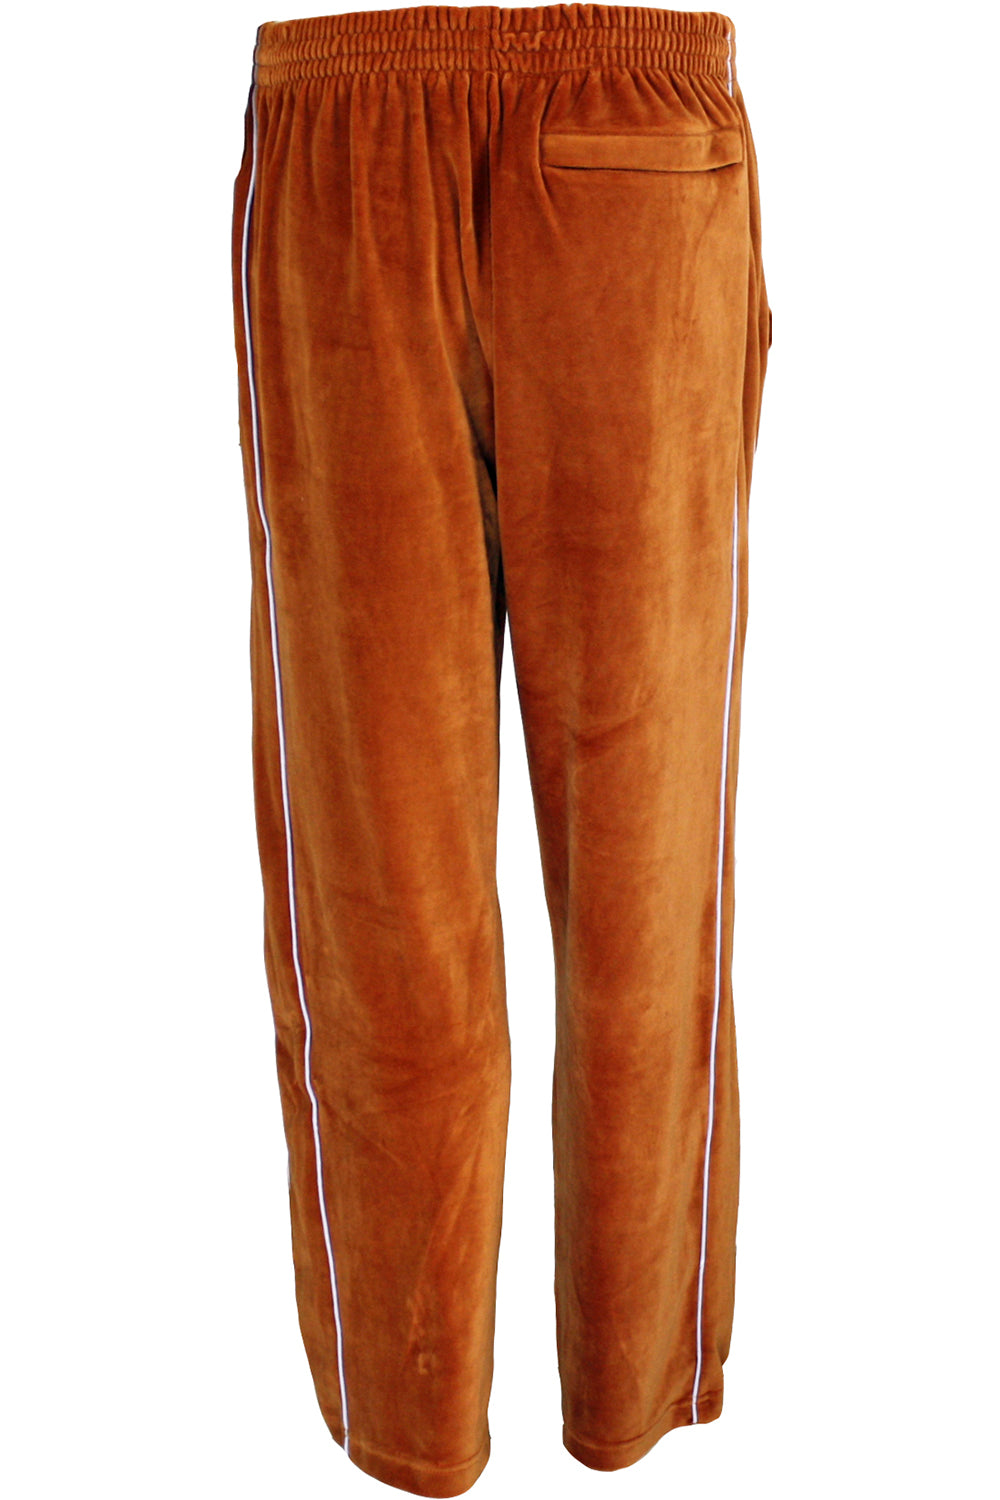 Plus Size Curvy Suit Trousers with Decorative Waistband - KOSTA - Orange